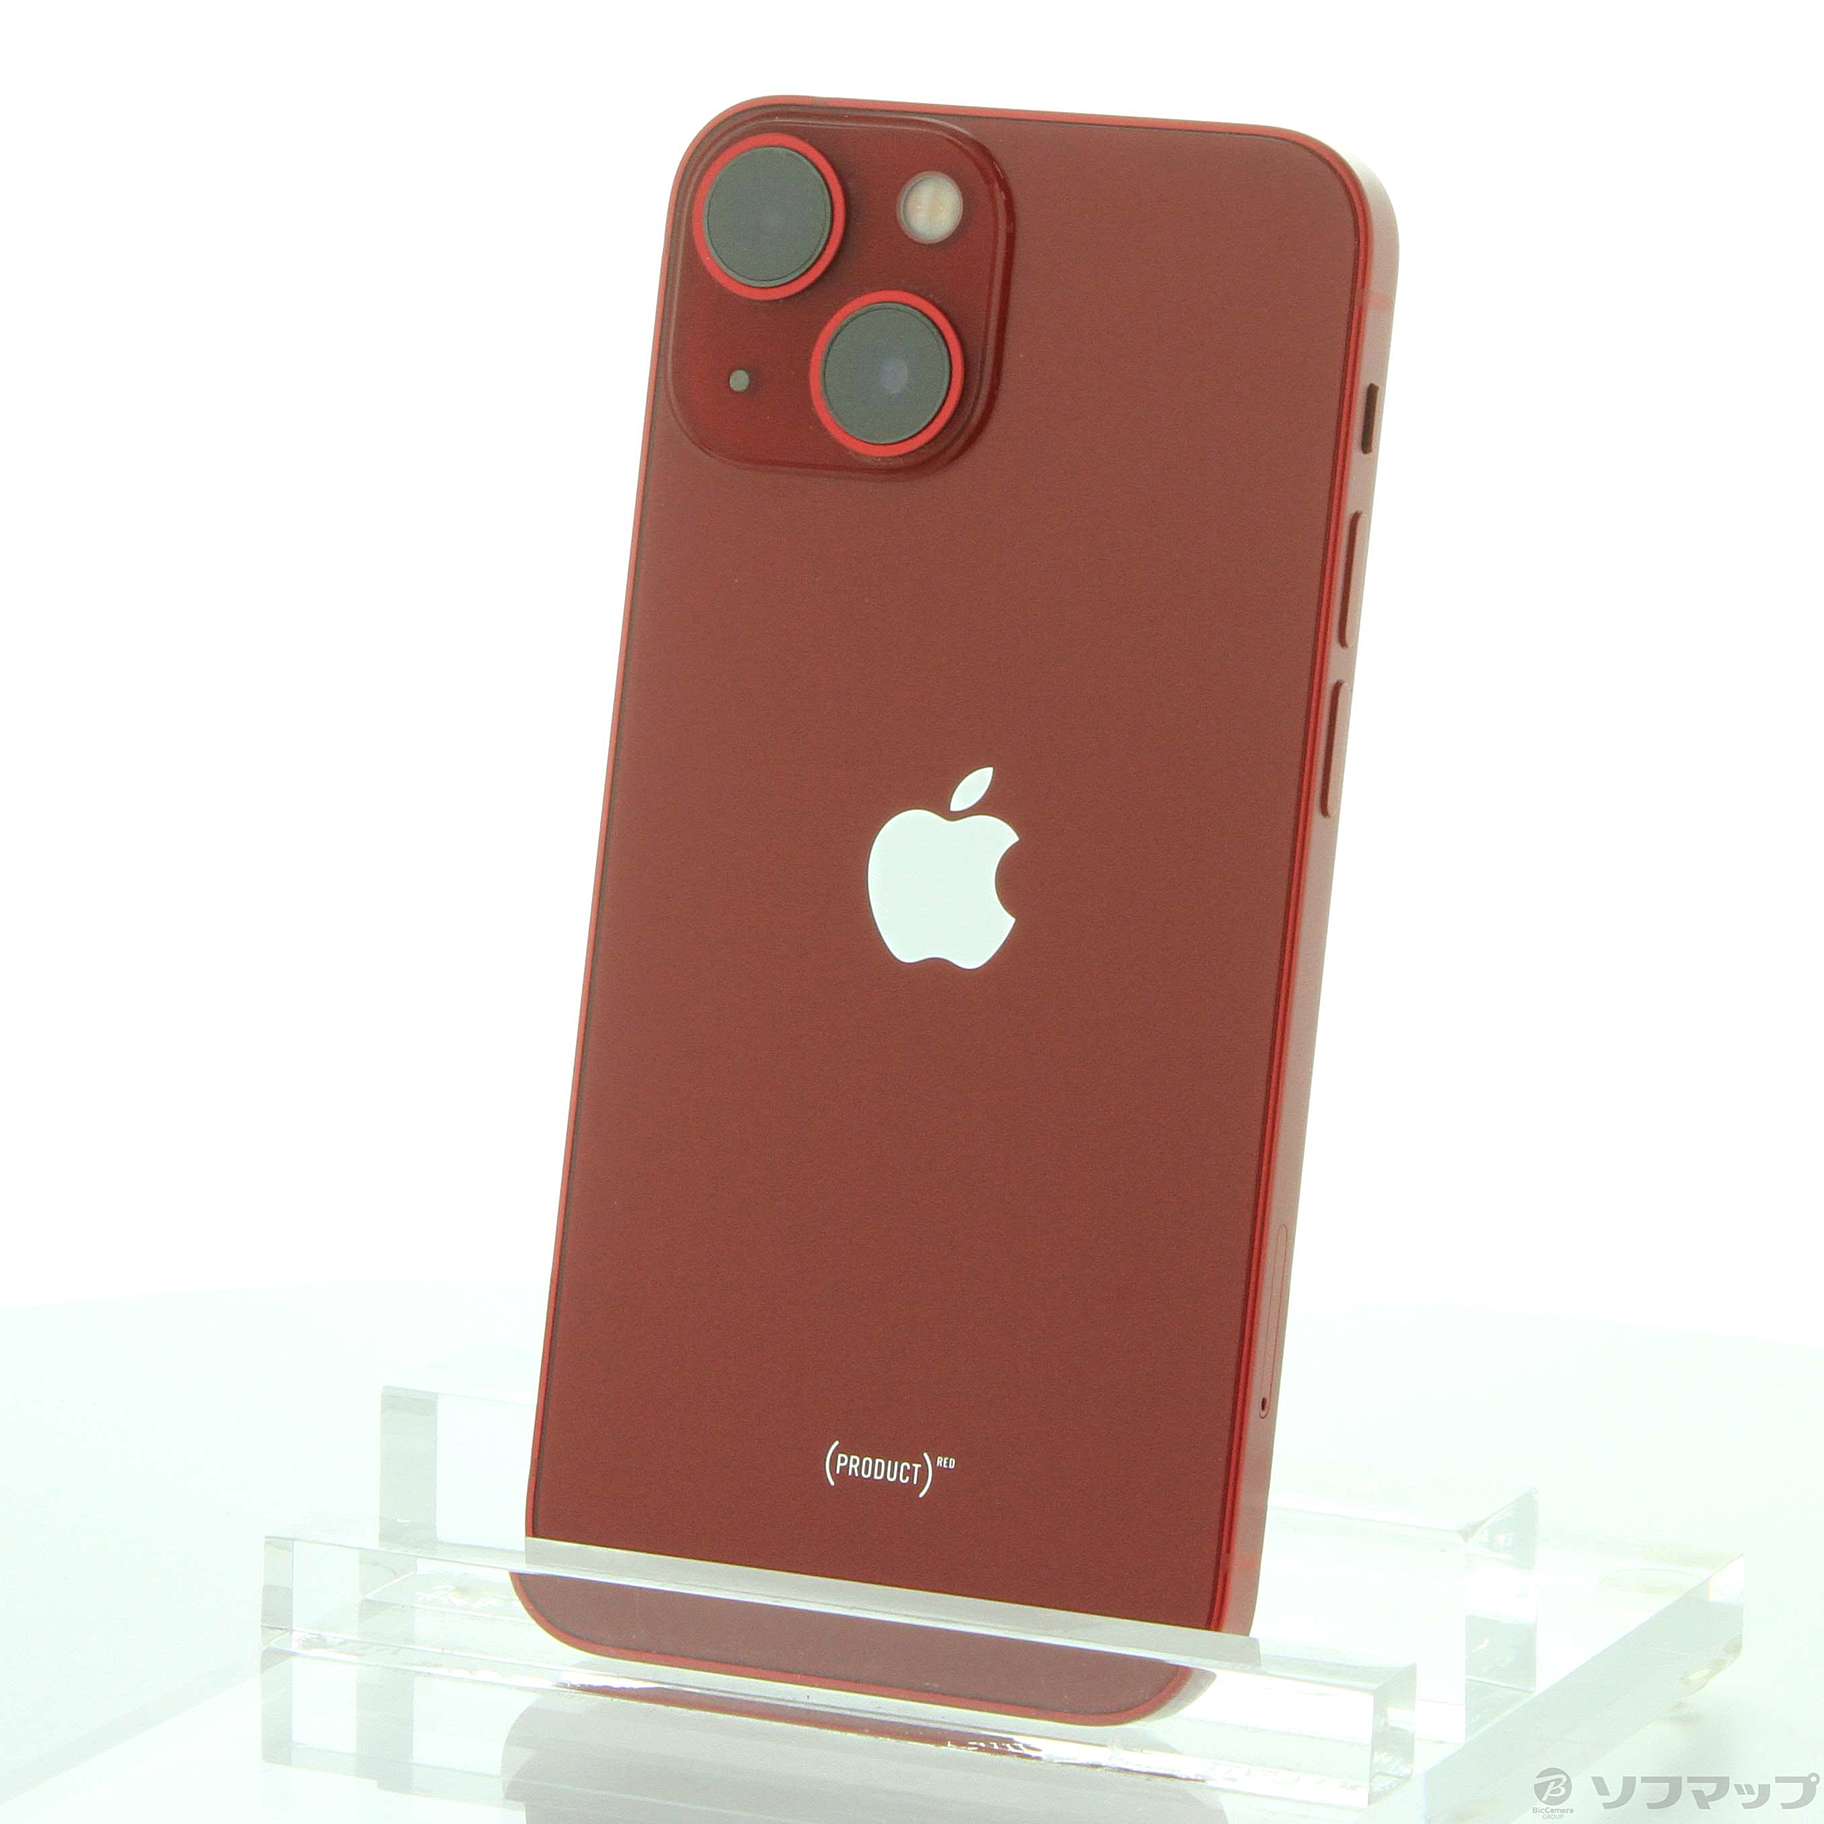 価格.com - Apple iPhone 13 mini 128GB SIMフリー 価格比較